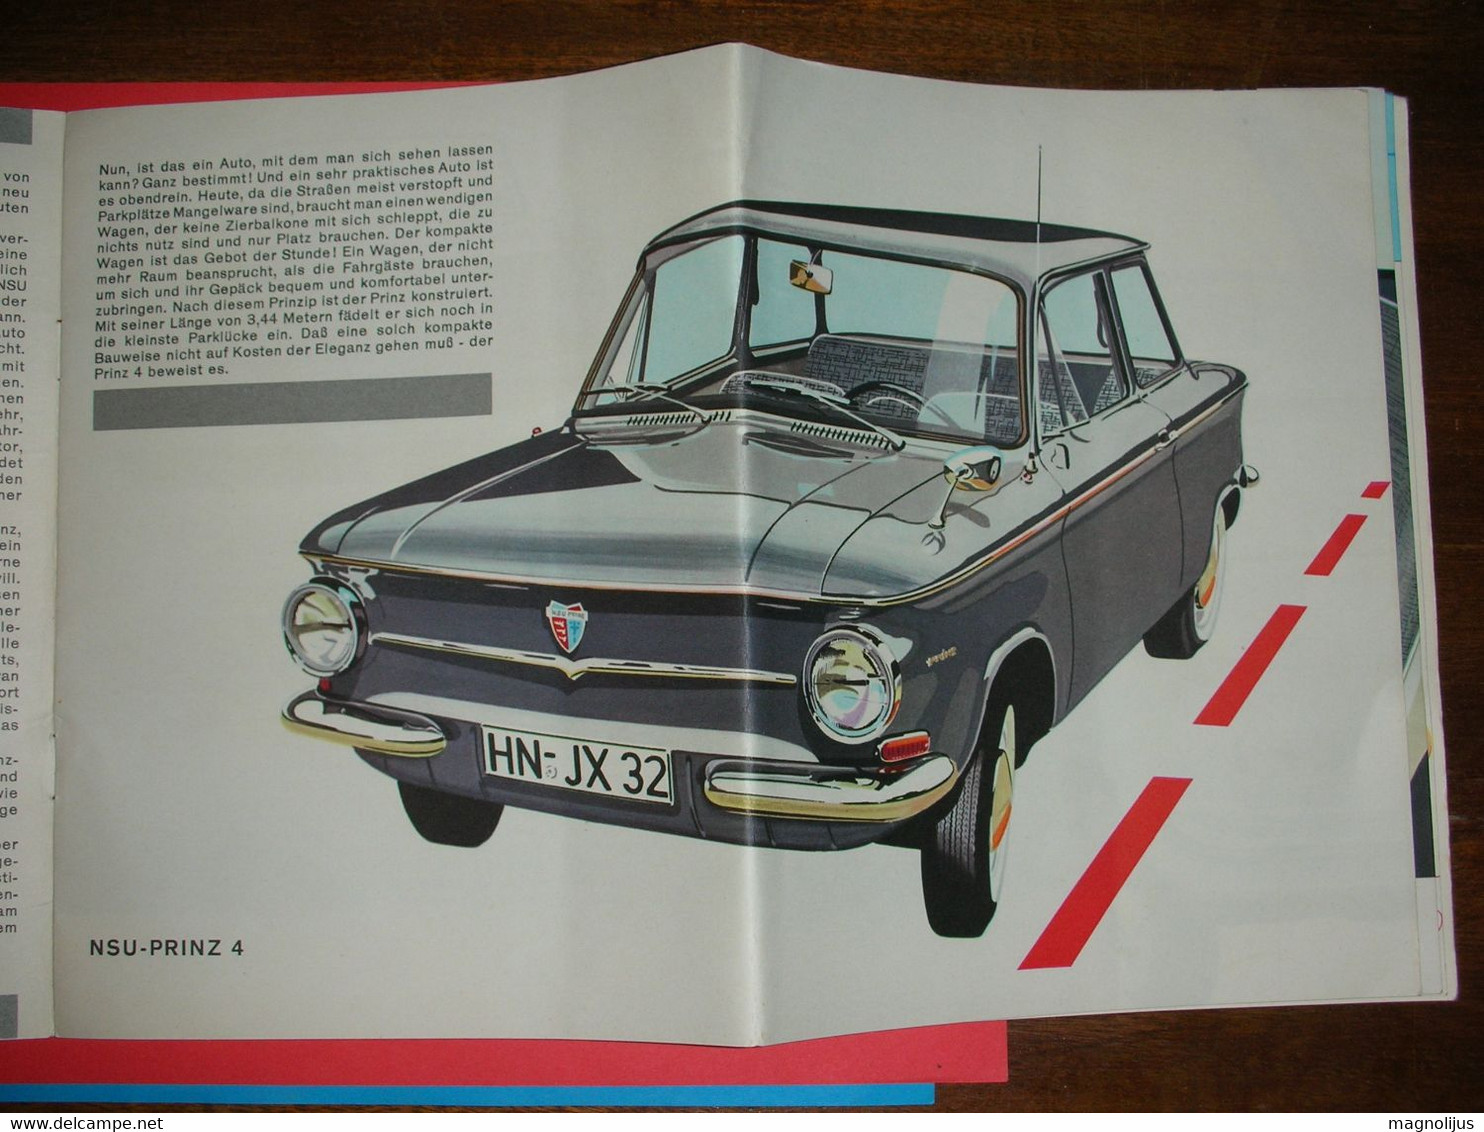 NSU-Prinz 4,automobile brochure,catalog,car instruction,Benz shop drivers guide,dim.29.5x19.5 cm,old timer advertising